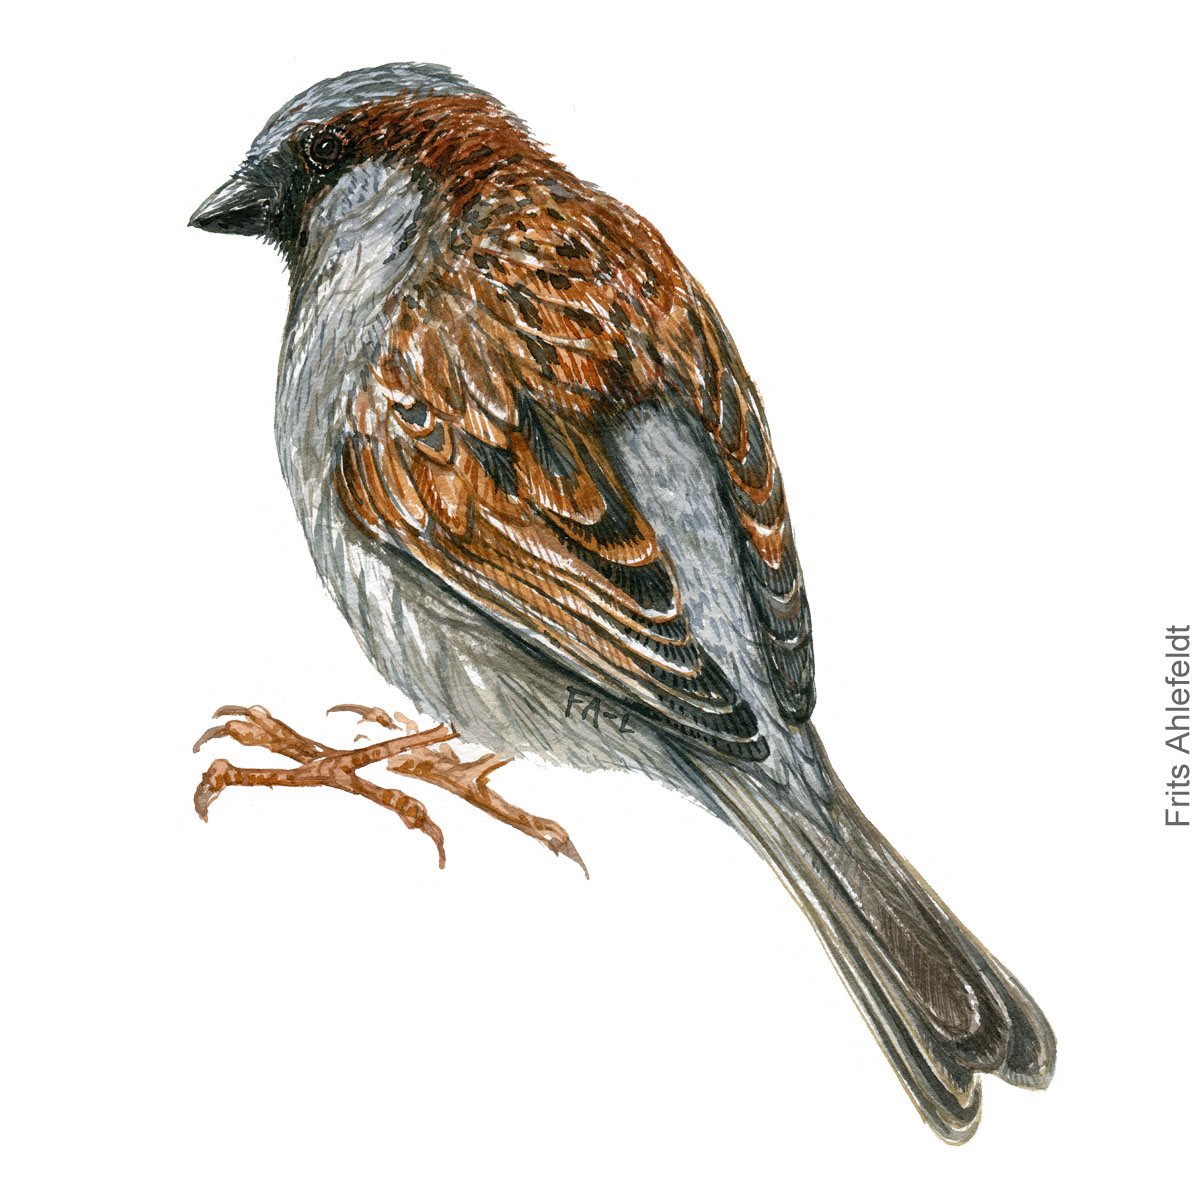 graaspurv - House sparrow bird watercolor illustration. Artwork by Frits Ahlefeldt. Fugle akvarel